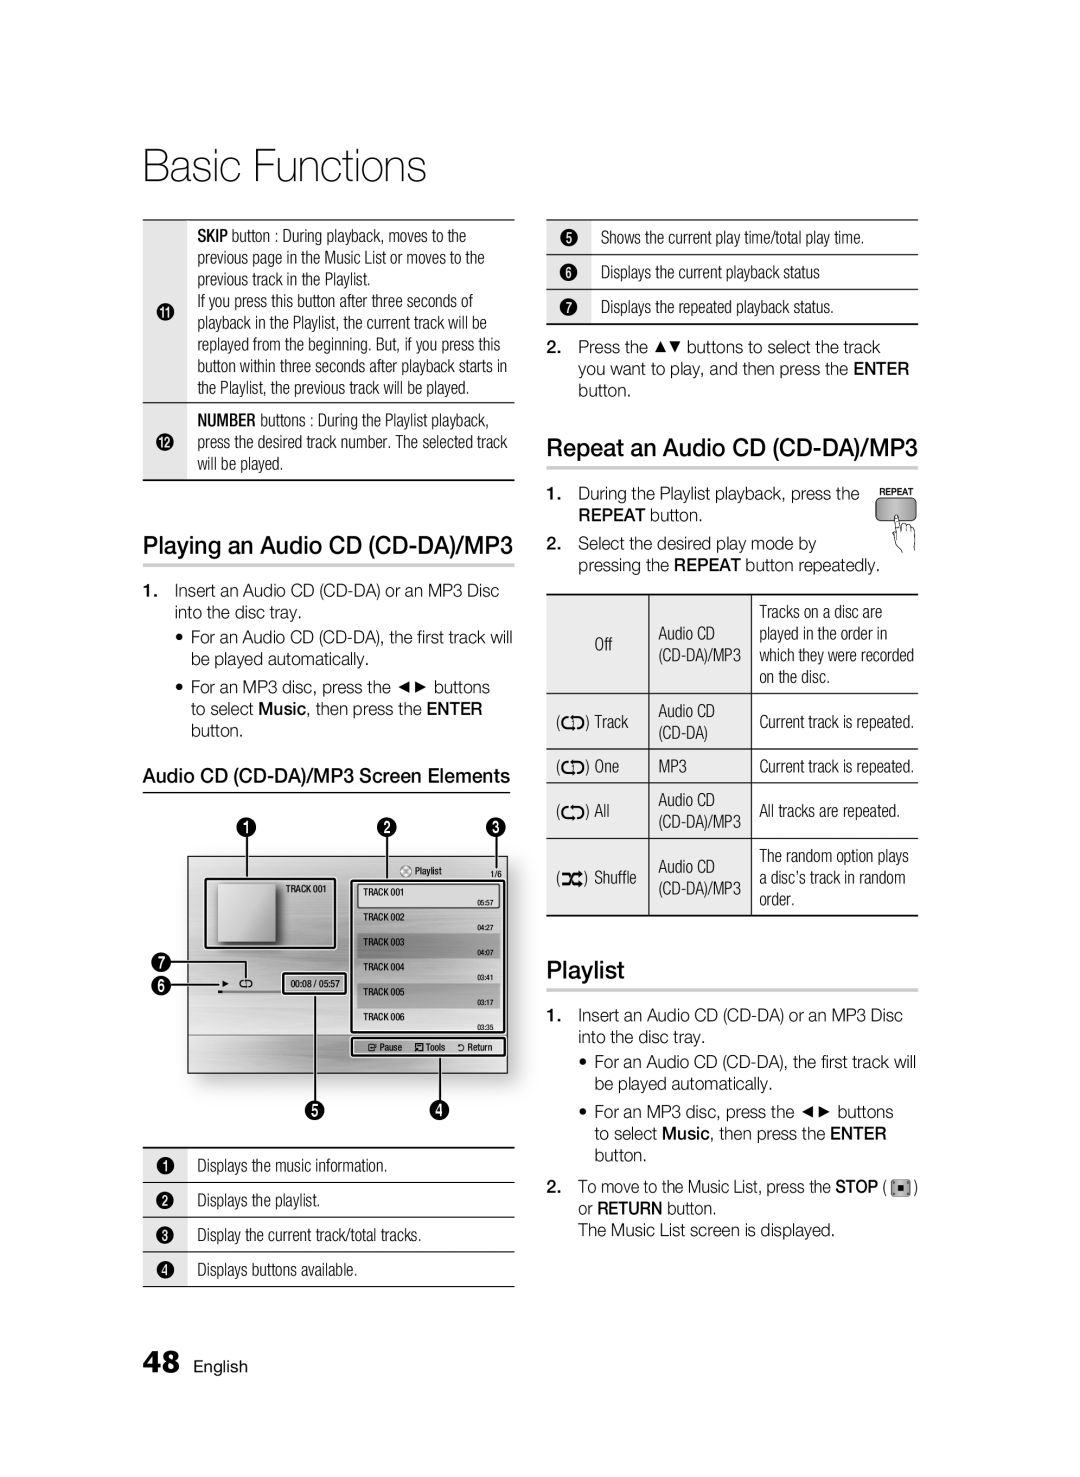 Samsung BD-C6300 Playing an Audio CD CD-DA/MP3, Repeat an Audio CD CD-DA/MP3, Playlist, Audio CD CD-DA/MP3 Screen Elements 